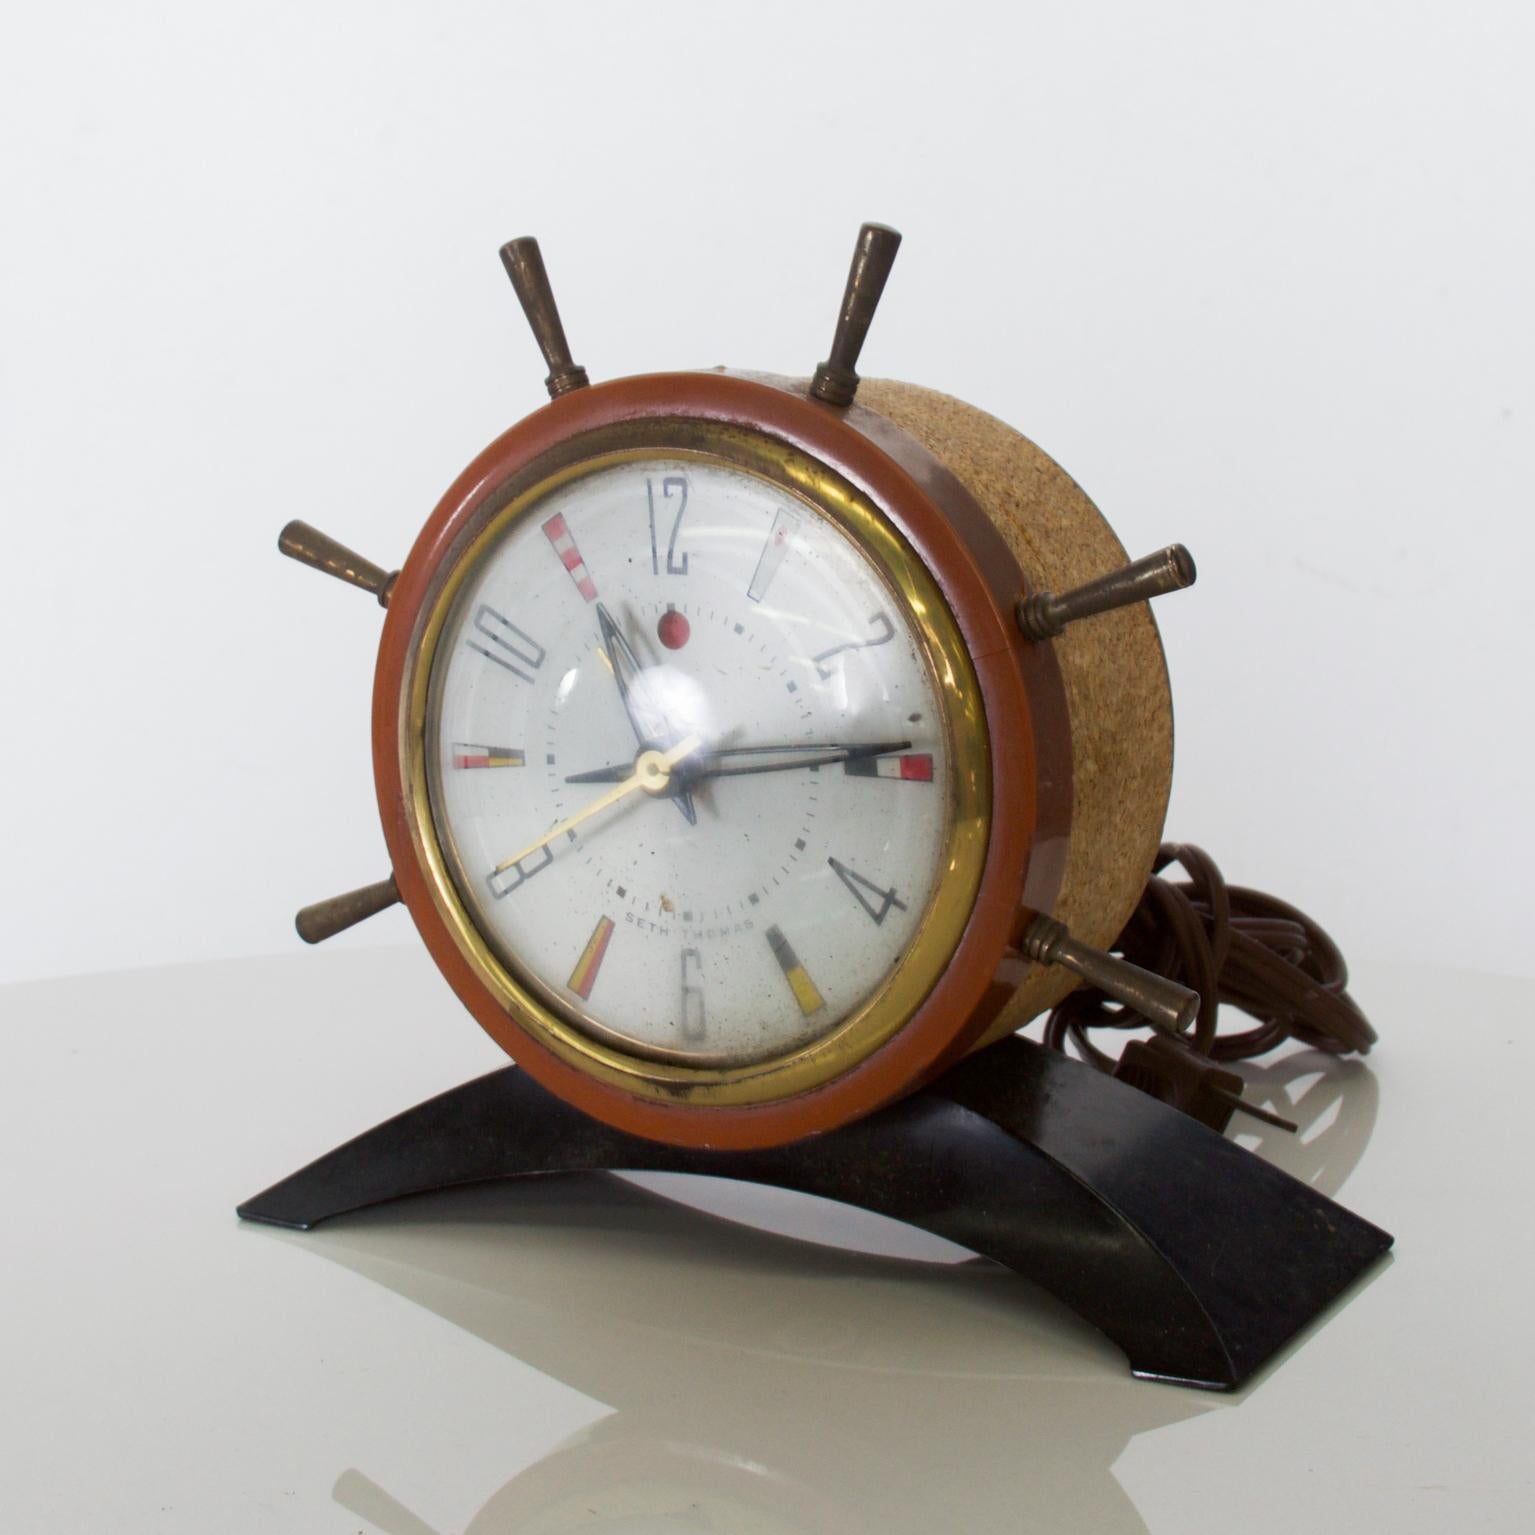 For your consideration: Seth Thomas nautical ship wheel rudder alarm clock, vintage electric, Mid-Century Modern nautical marine theme designed with metal, plastic and cork trim, USA, 1951

Dimensions: 5 3/4